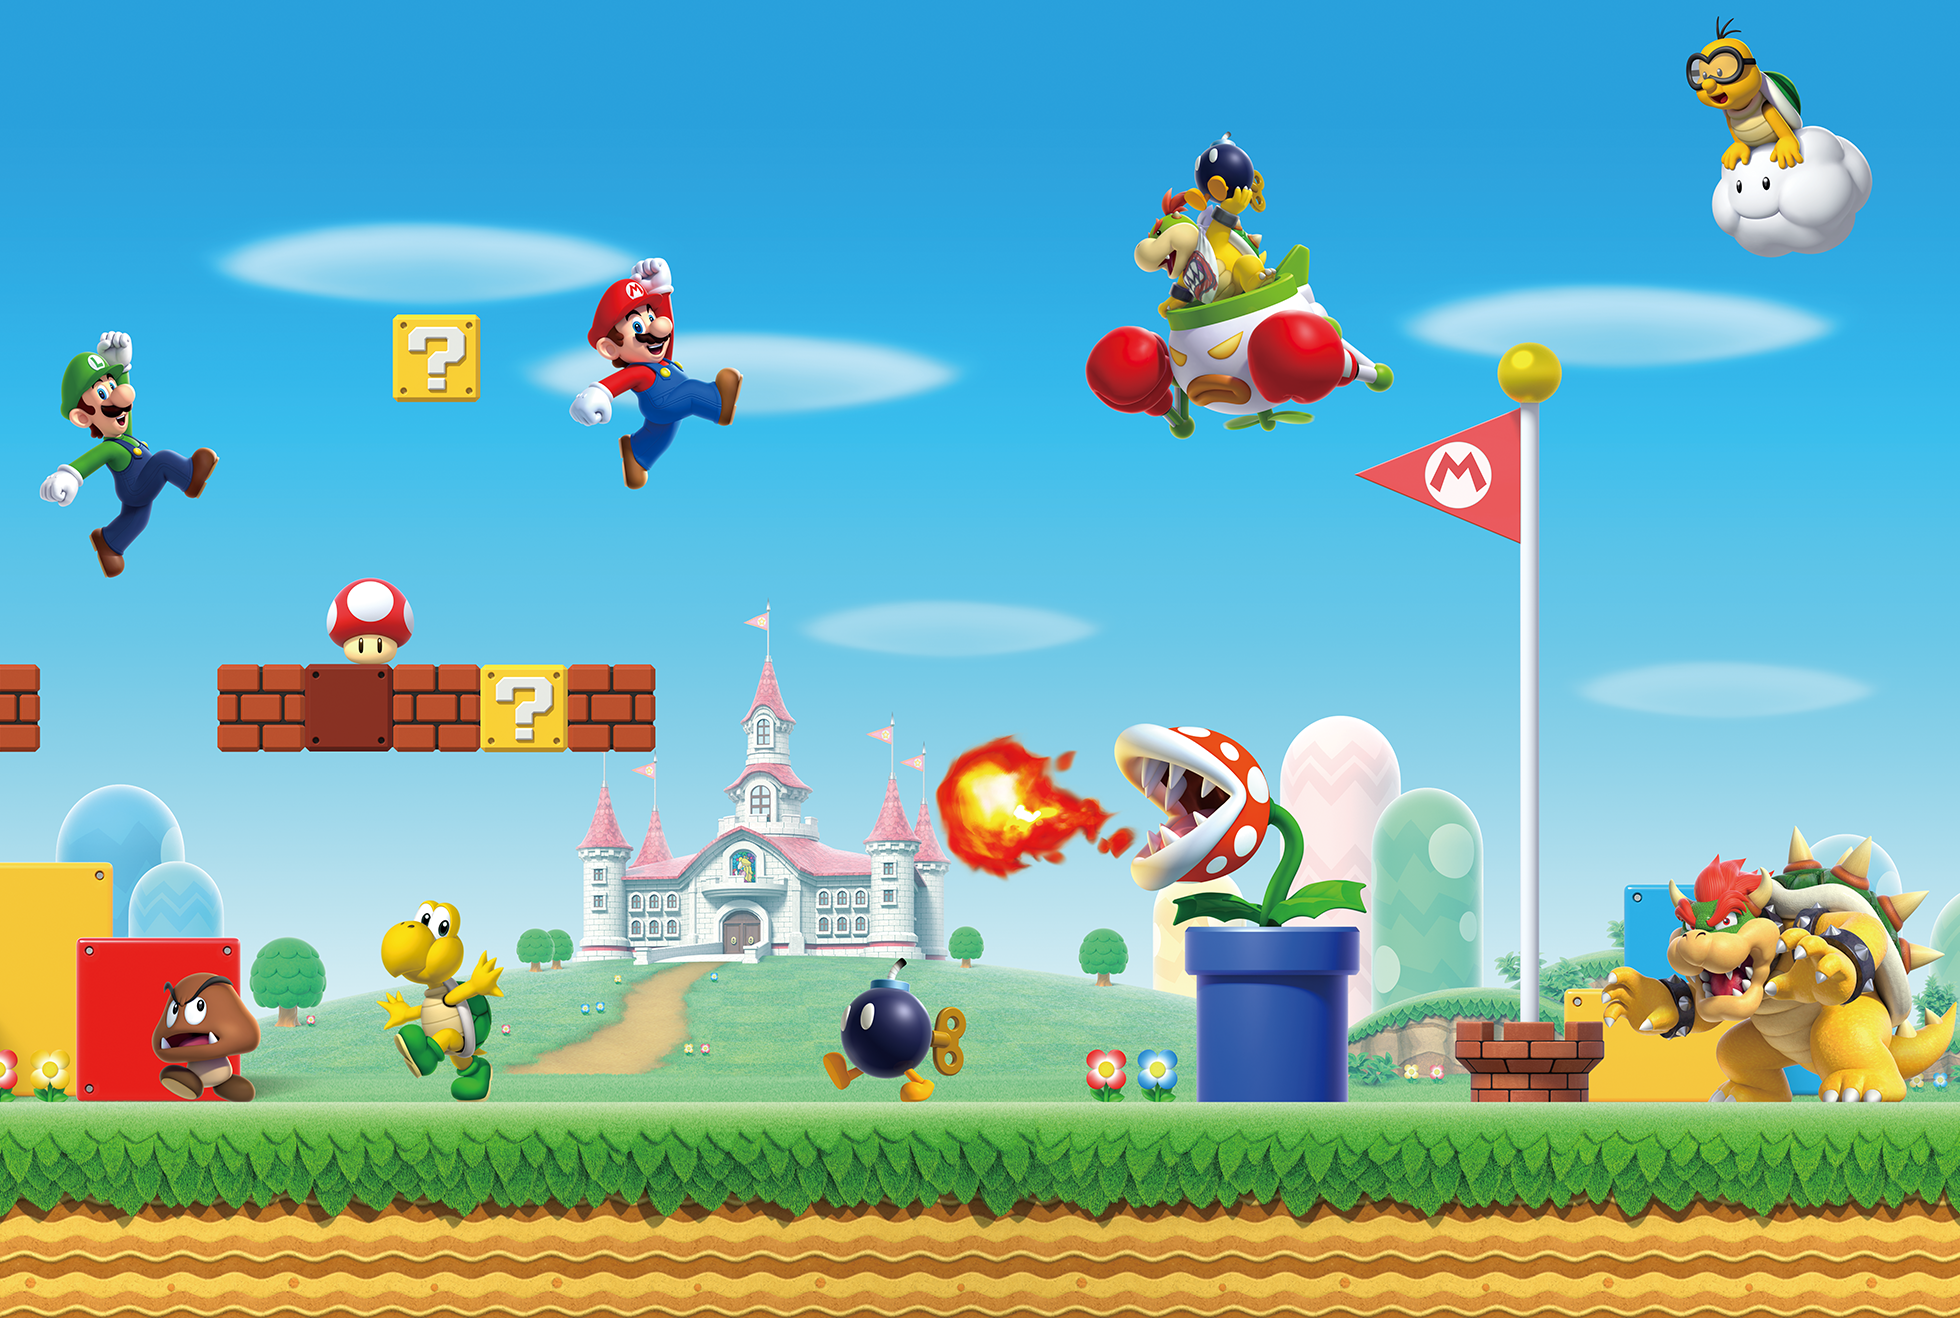 Online Jigsaw Puzzle: Mushroom Kingdom - Mario & Friends - Play Nintendo